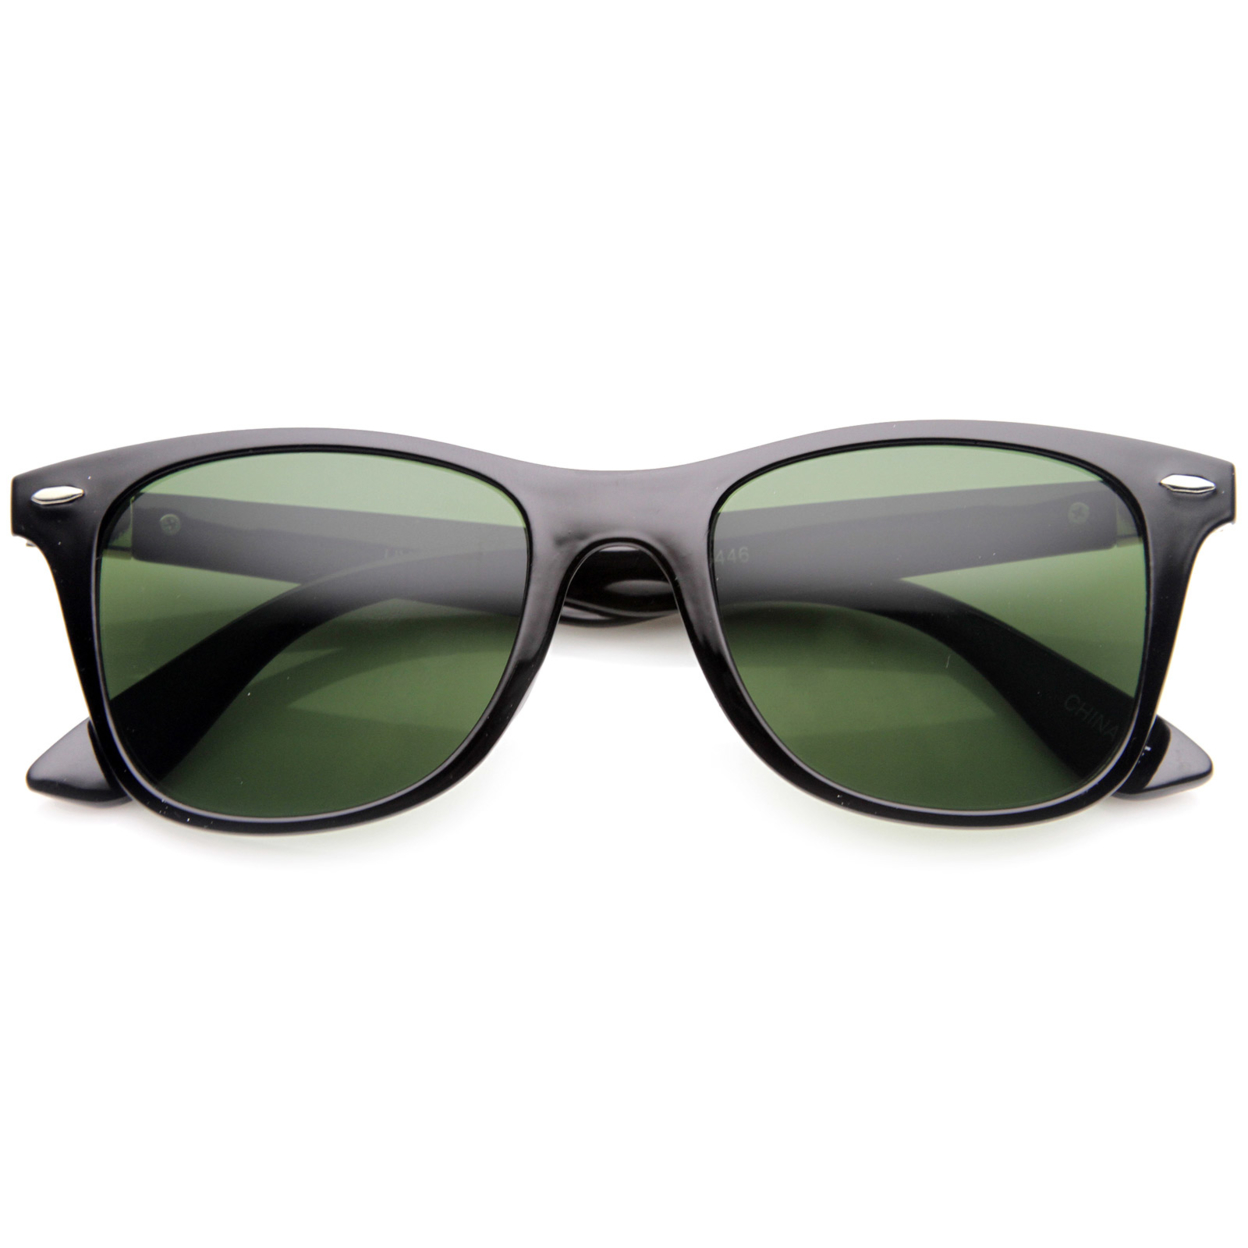 Modern Plastic Horn Rimmed Sunglasses Metal Temples 9750 - Shiny-Black Green